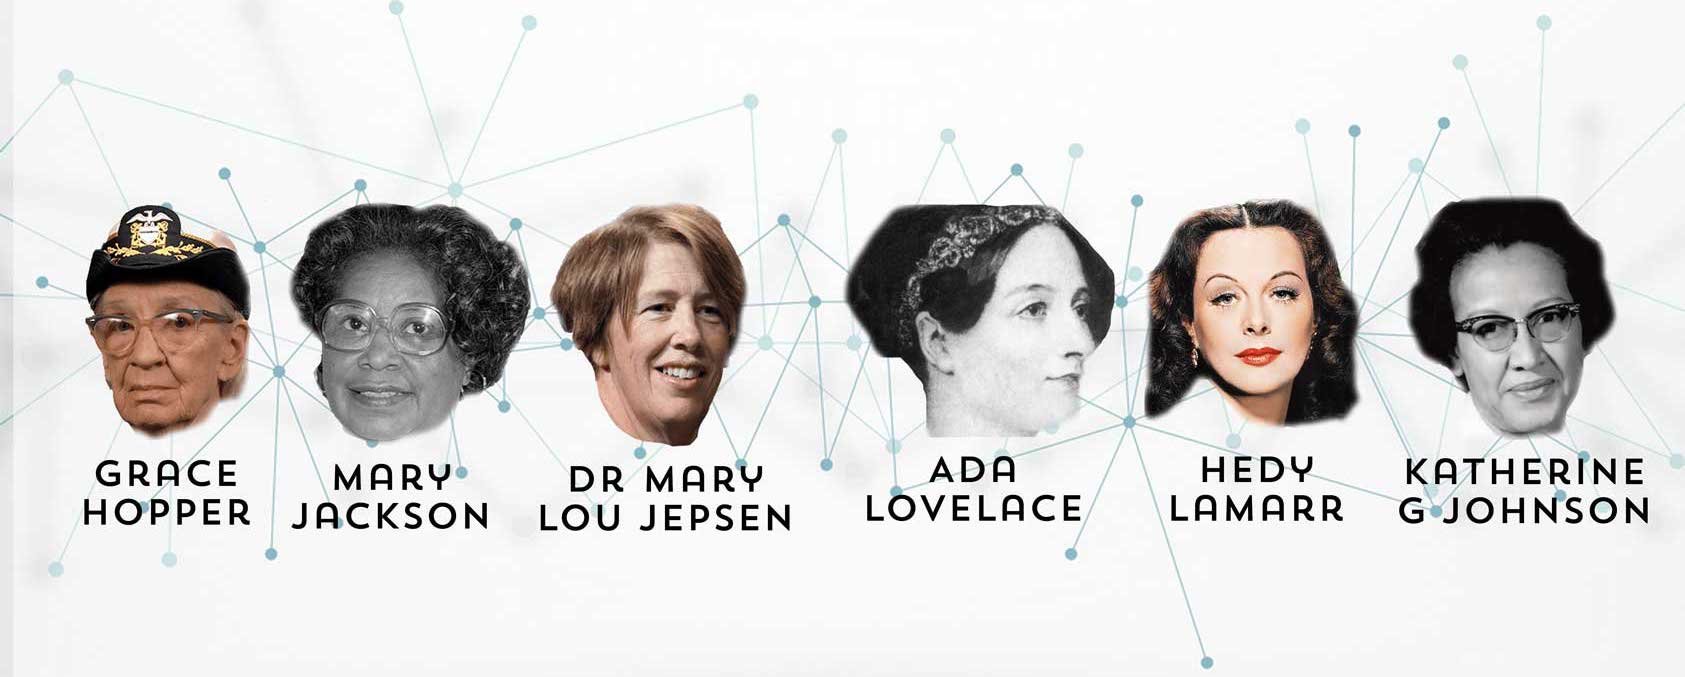 female tech leaders grace hopper, mary jackson, dr mary lou jepsen, ada lovelace, hedy lamarr, and katherine g-johnson